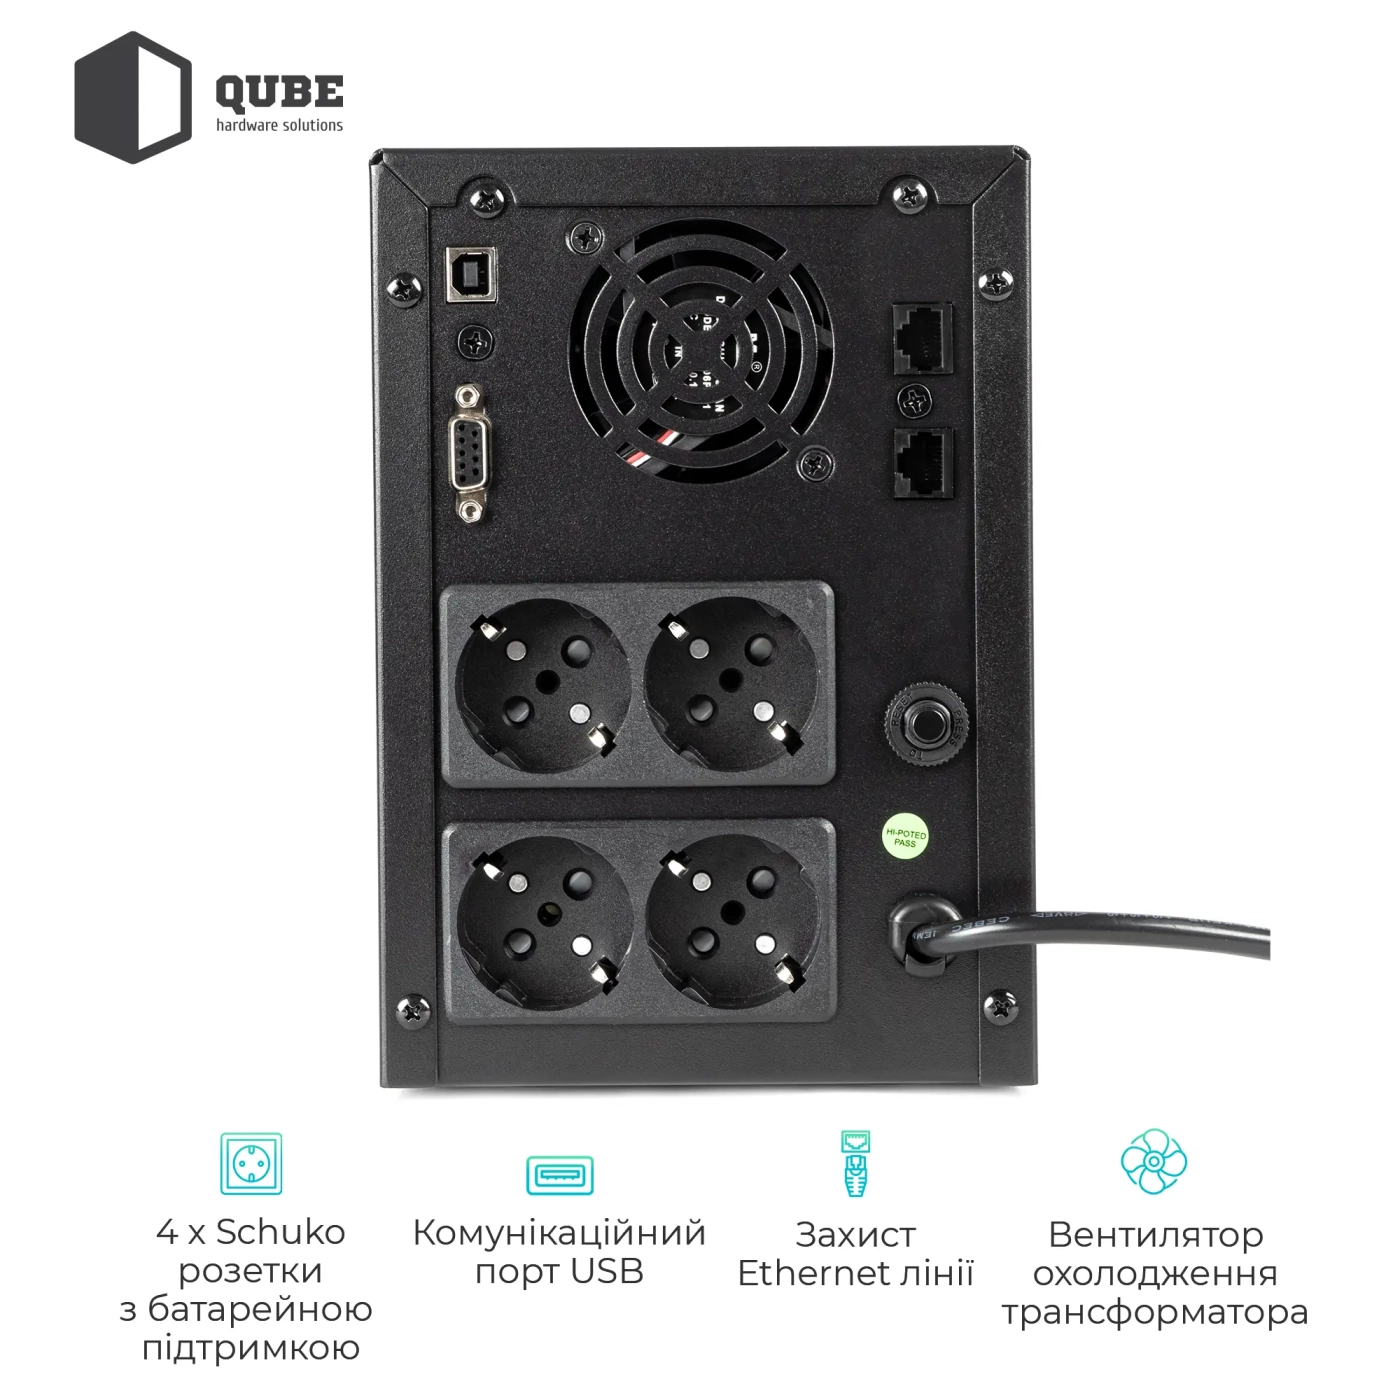 Купить ИБП (UPS) линейно-интерактивный Qube DG 2450, 2450VA/1440W, LCD, 4 x Schuko, RJ-45, USB - фото 4